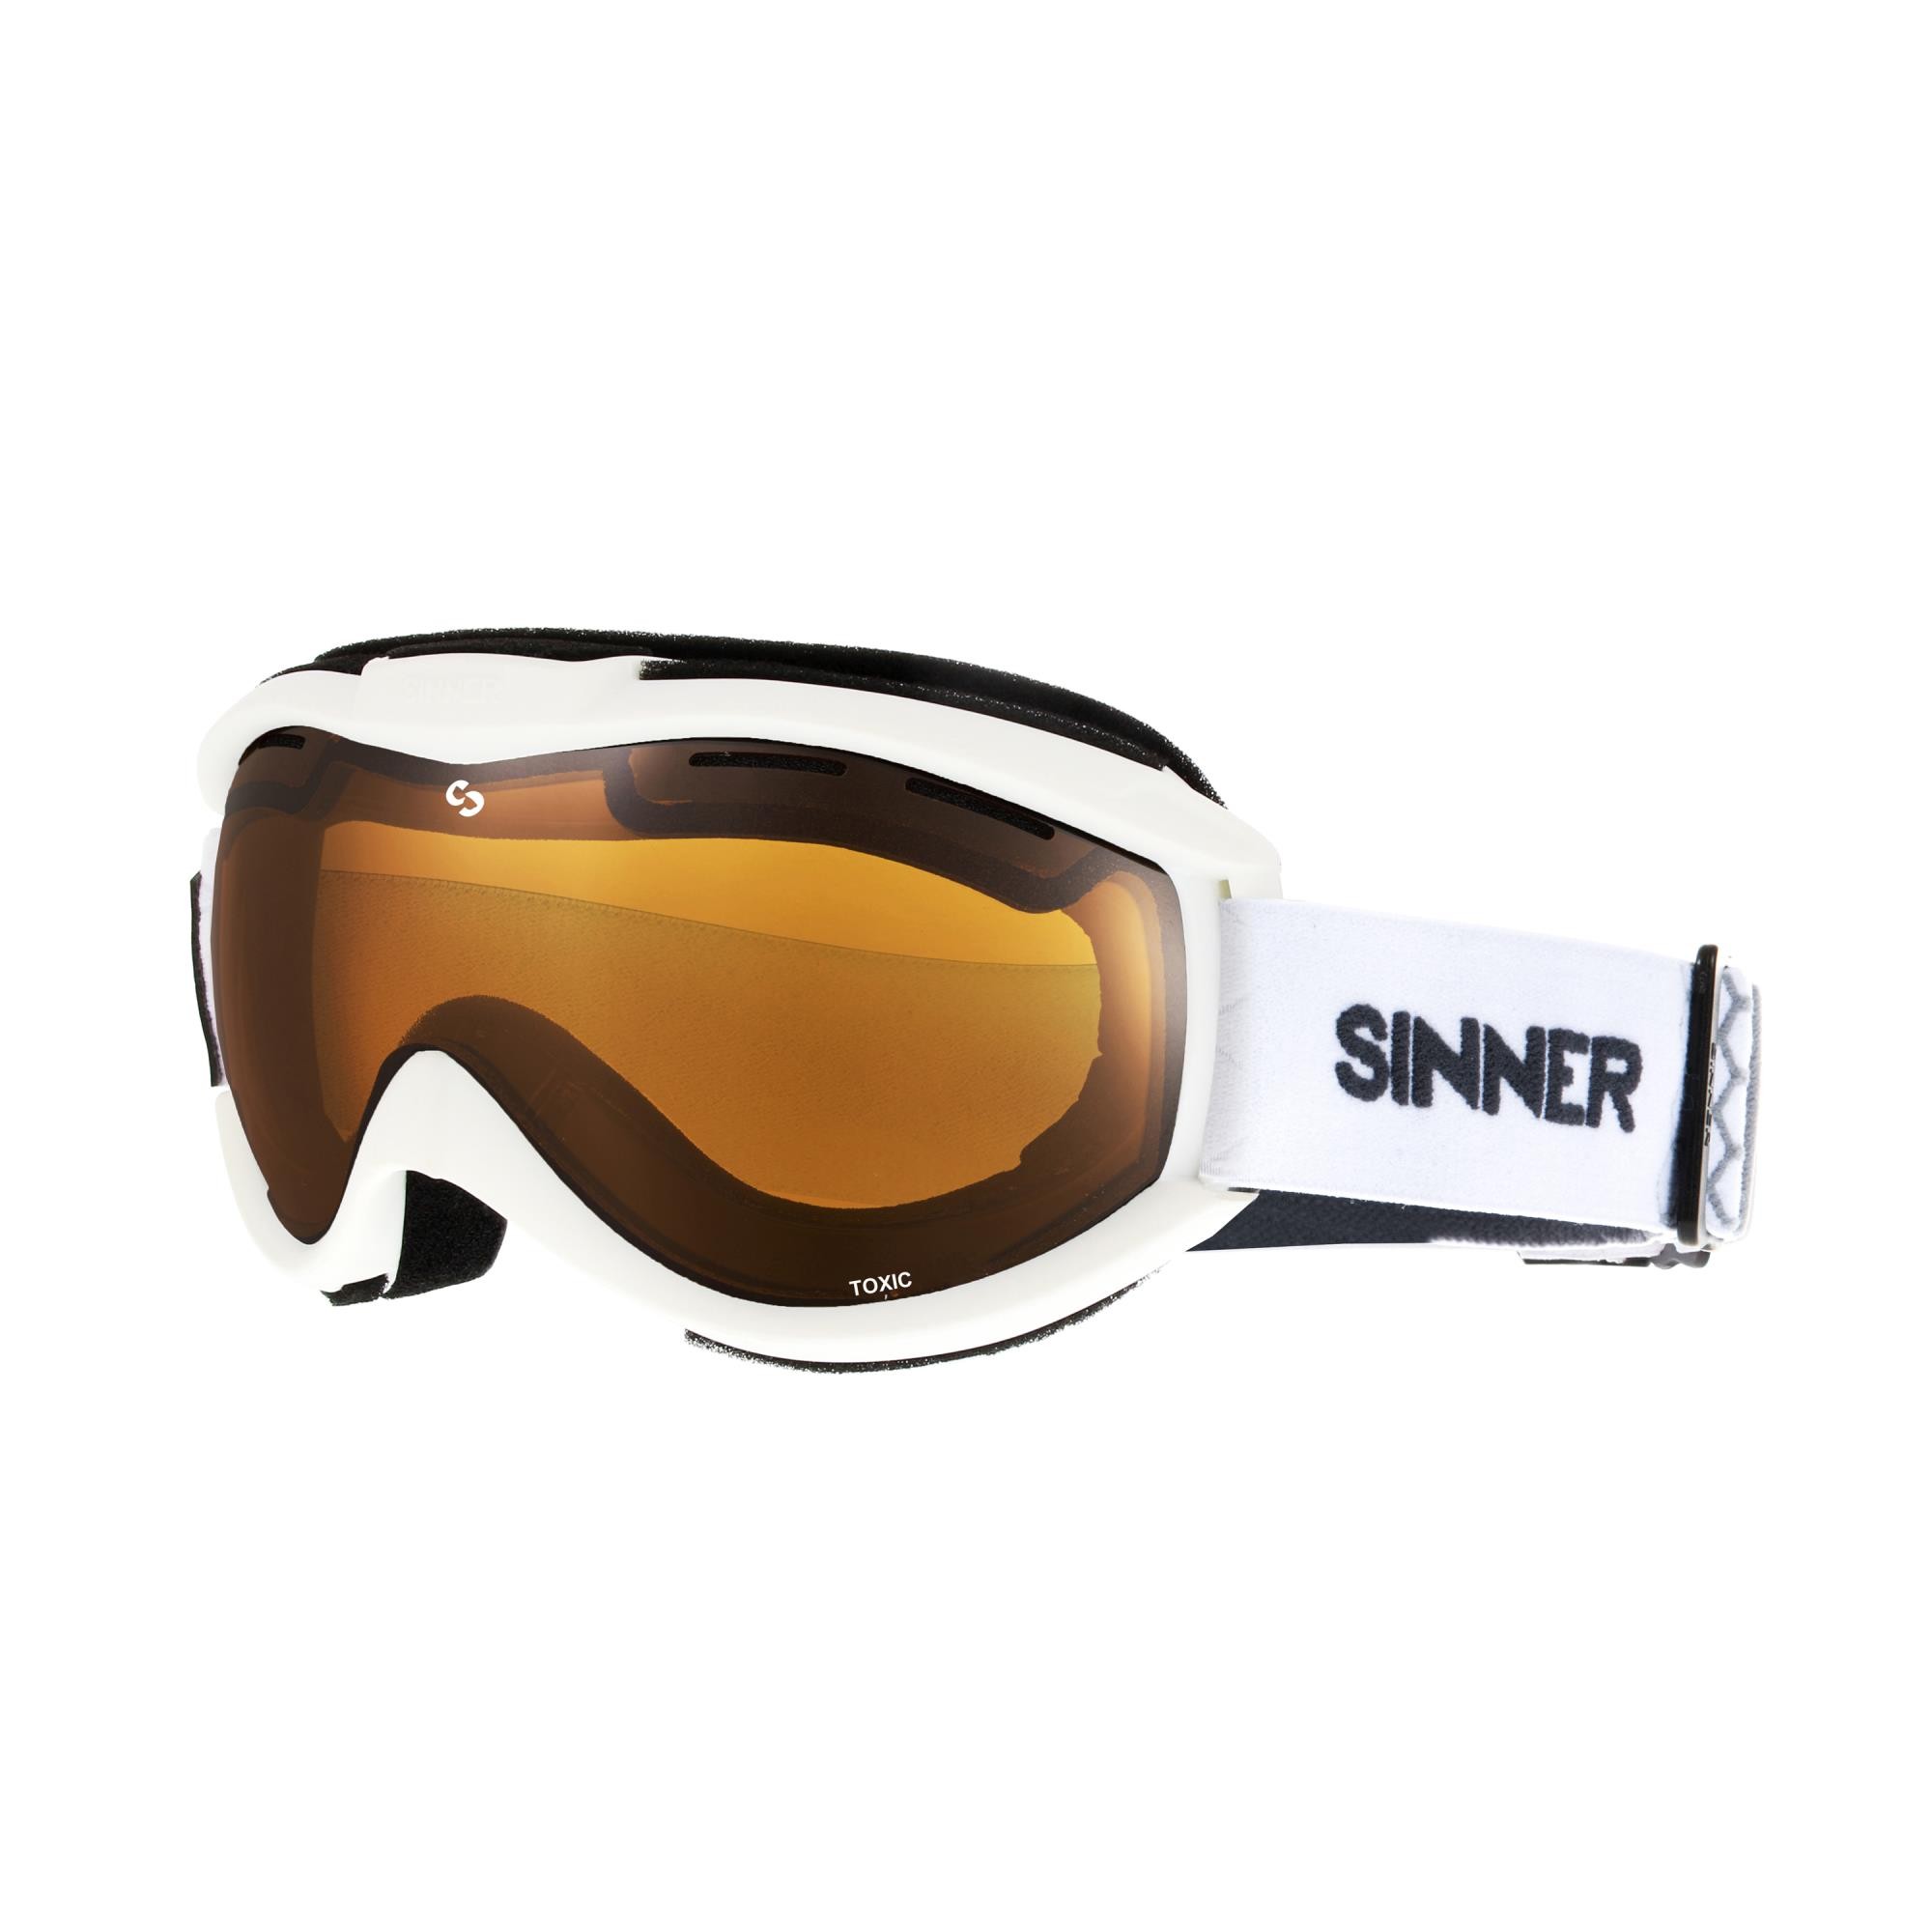 Sinner Toxic Skibril - Wit - Oranje Lens